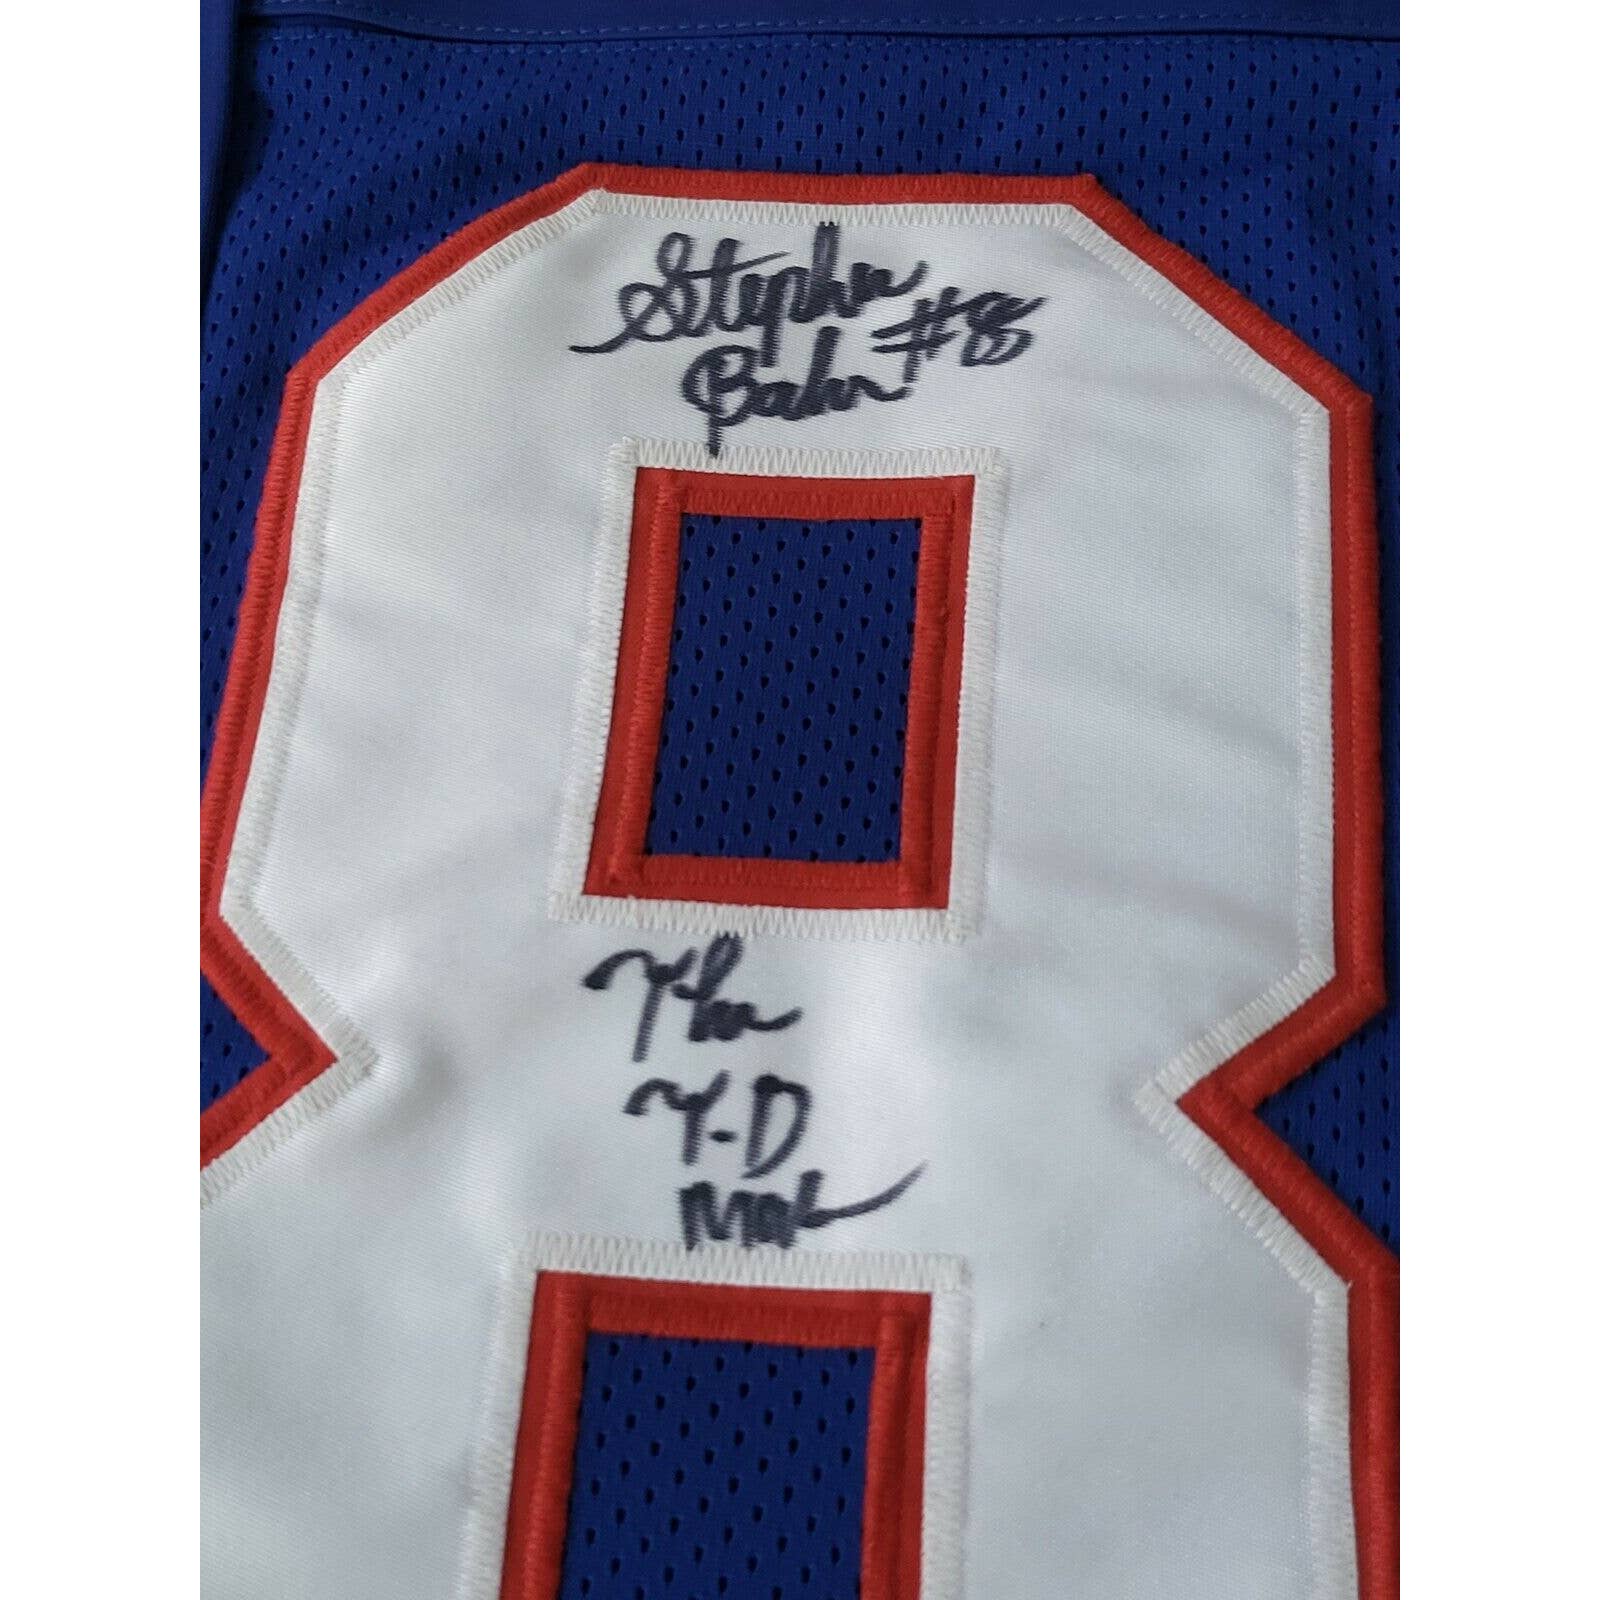 Stephen Baker Autographed/Signed Jersey New York Giants Star TD Maker - TreasuresEvolved